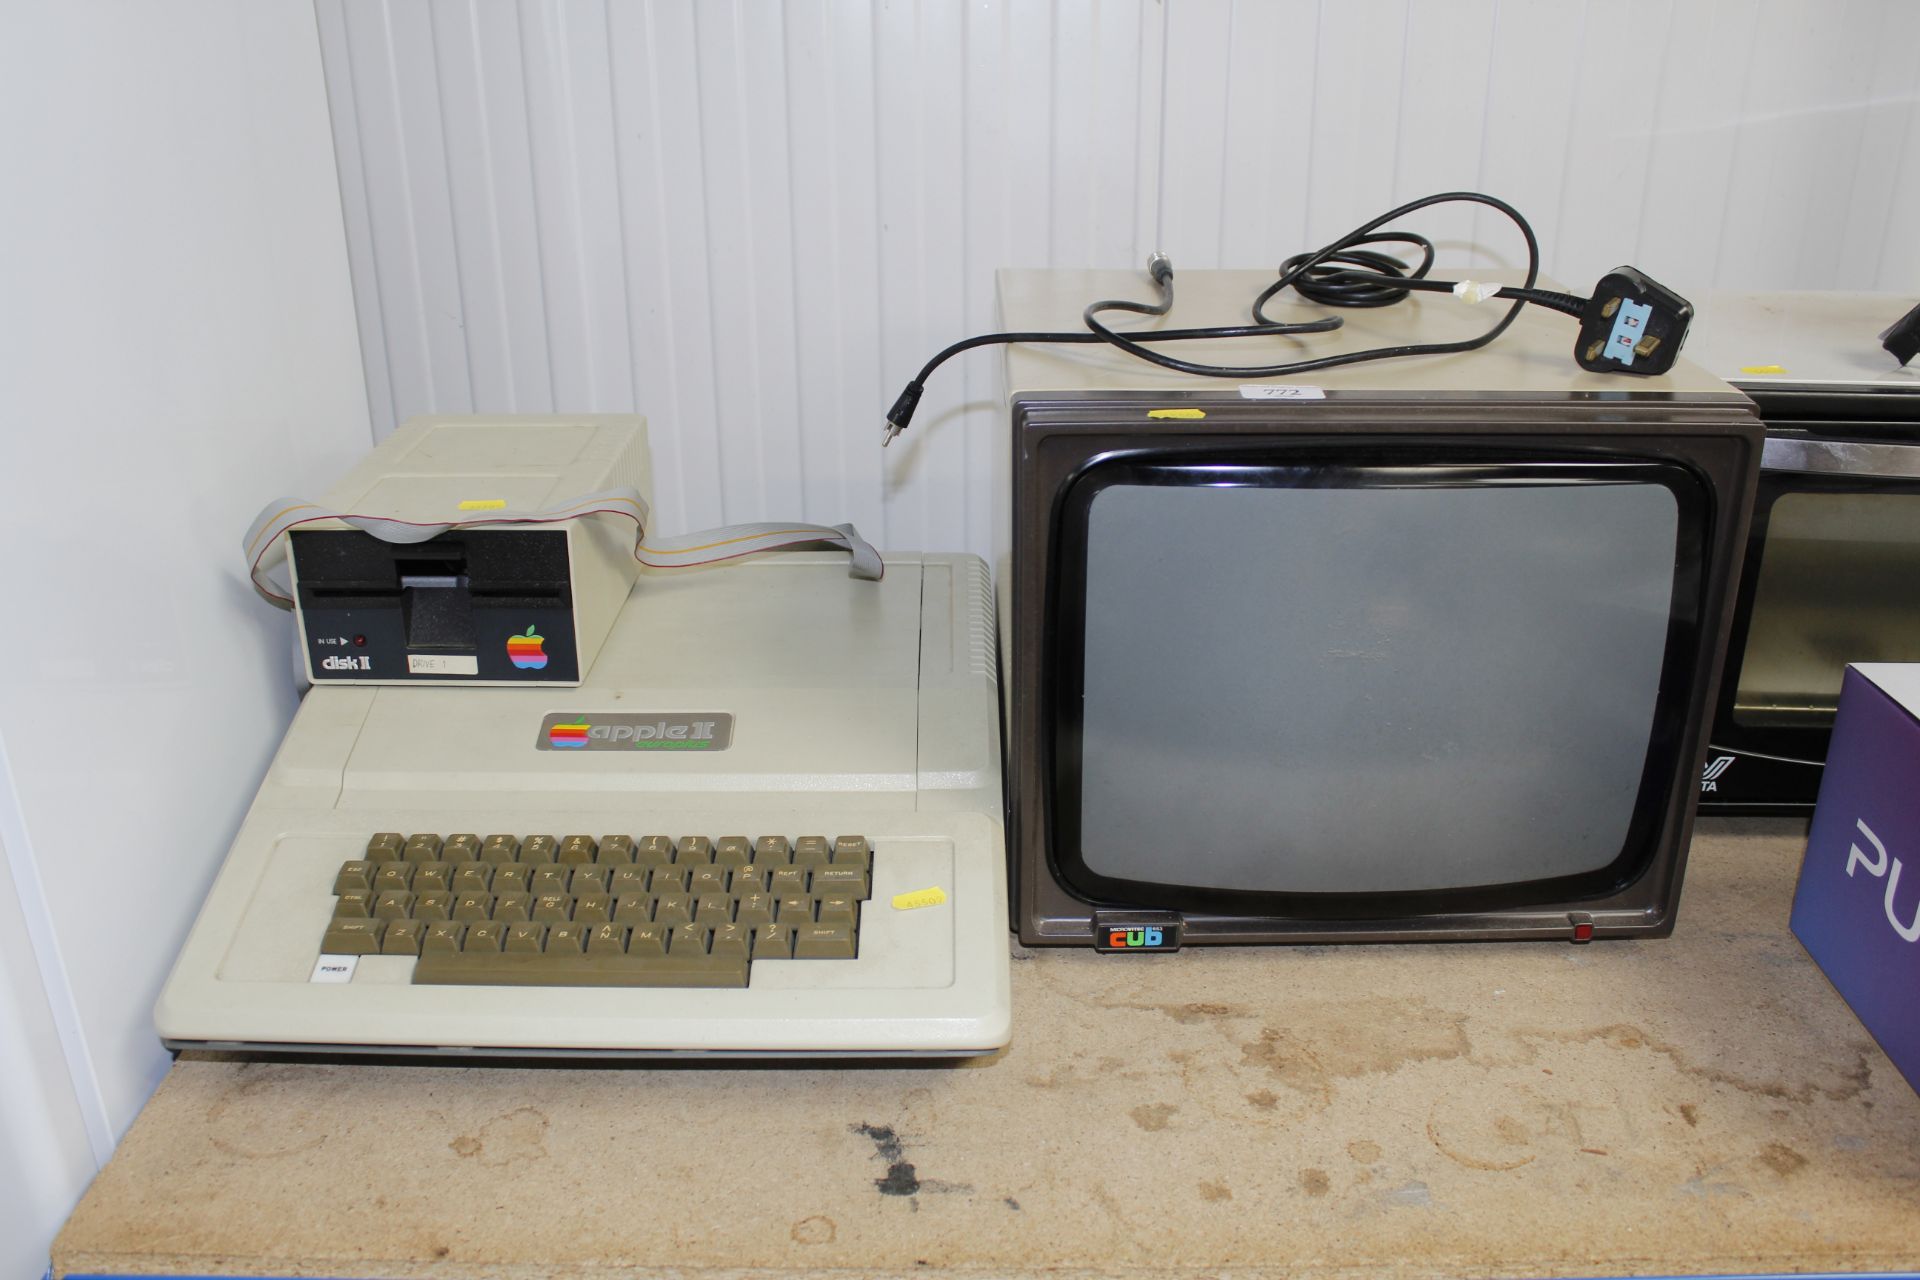 An Apple 2 Europlus computer, keyboard, monitor